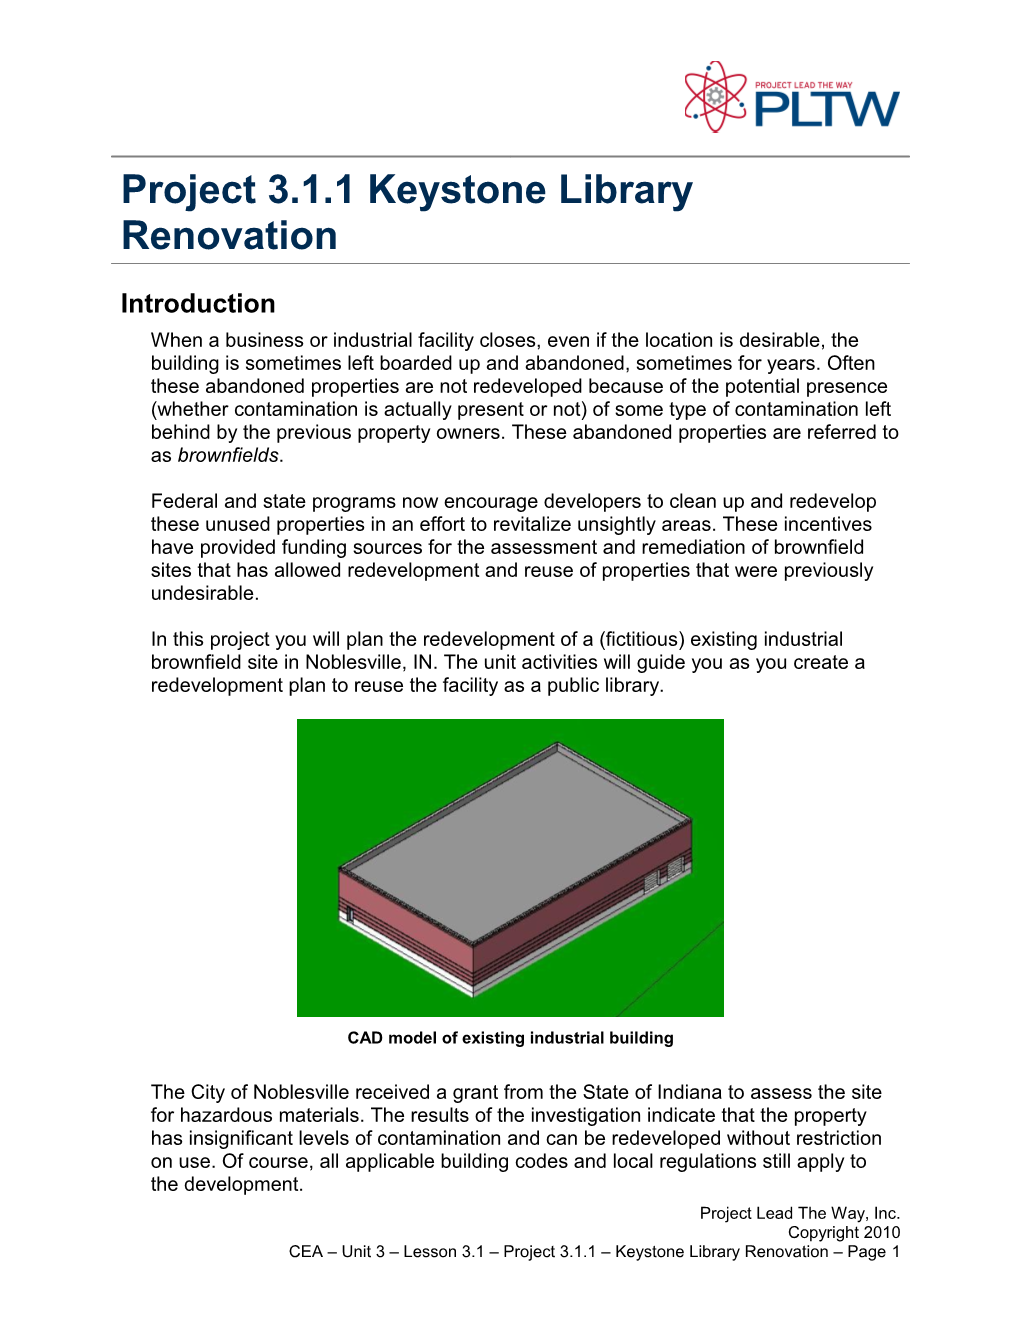 Project 3.1.1 Keystone Library Renovation